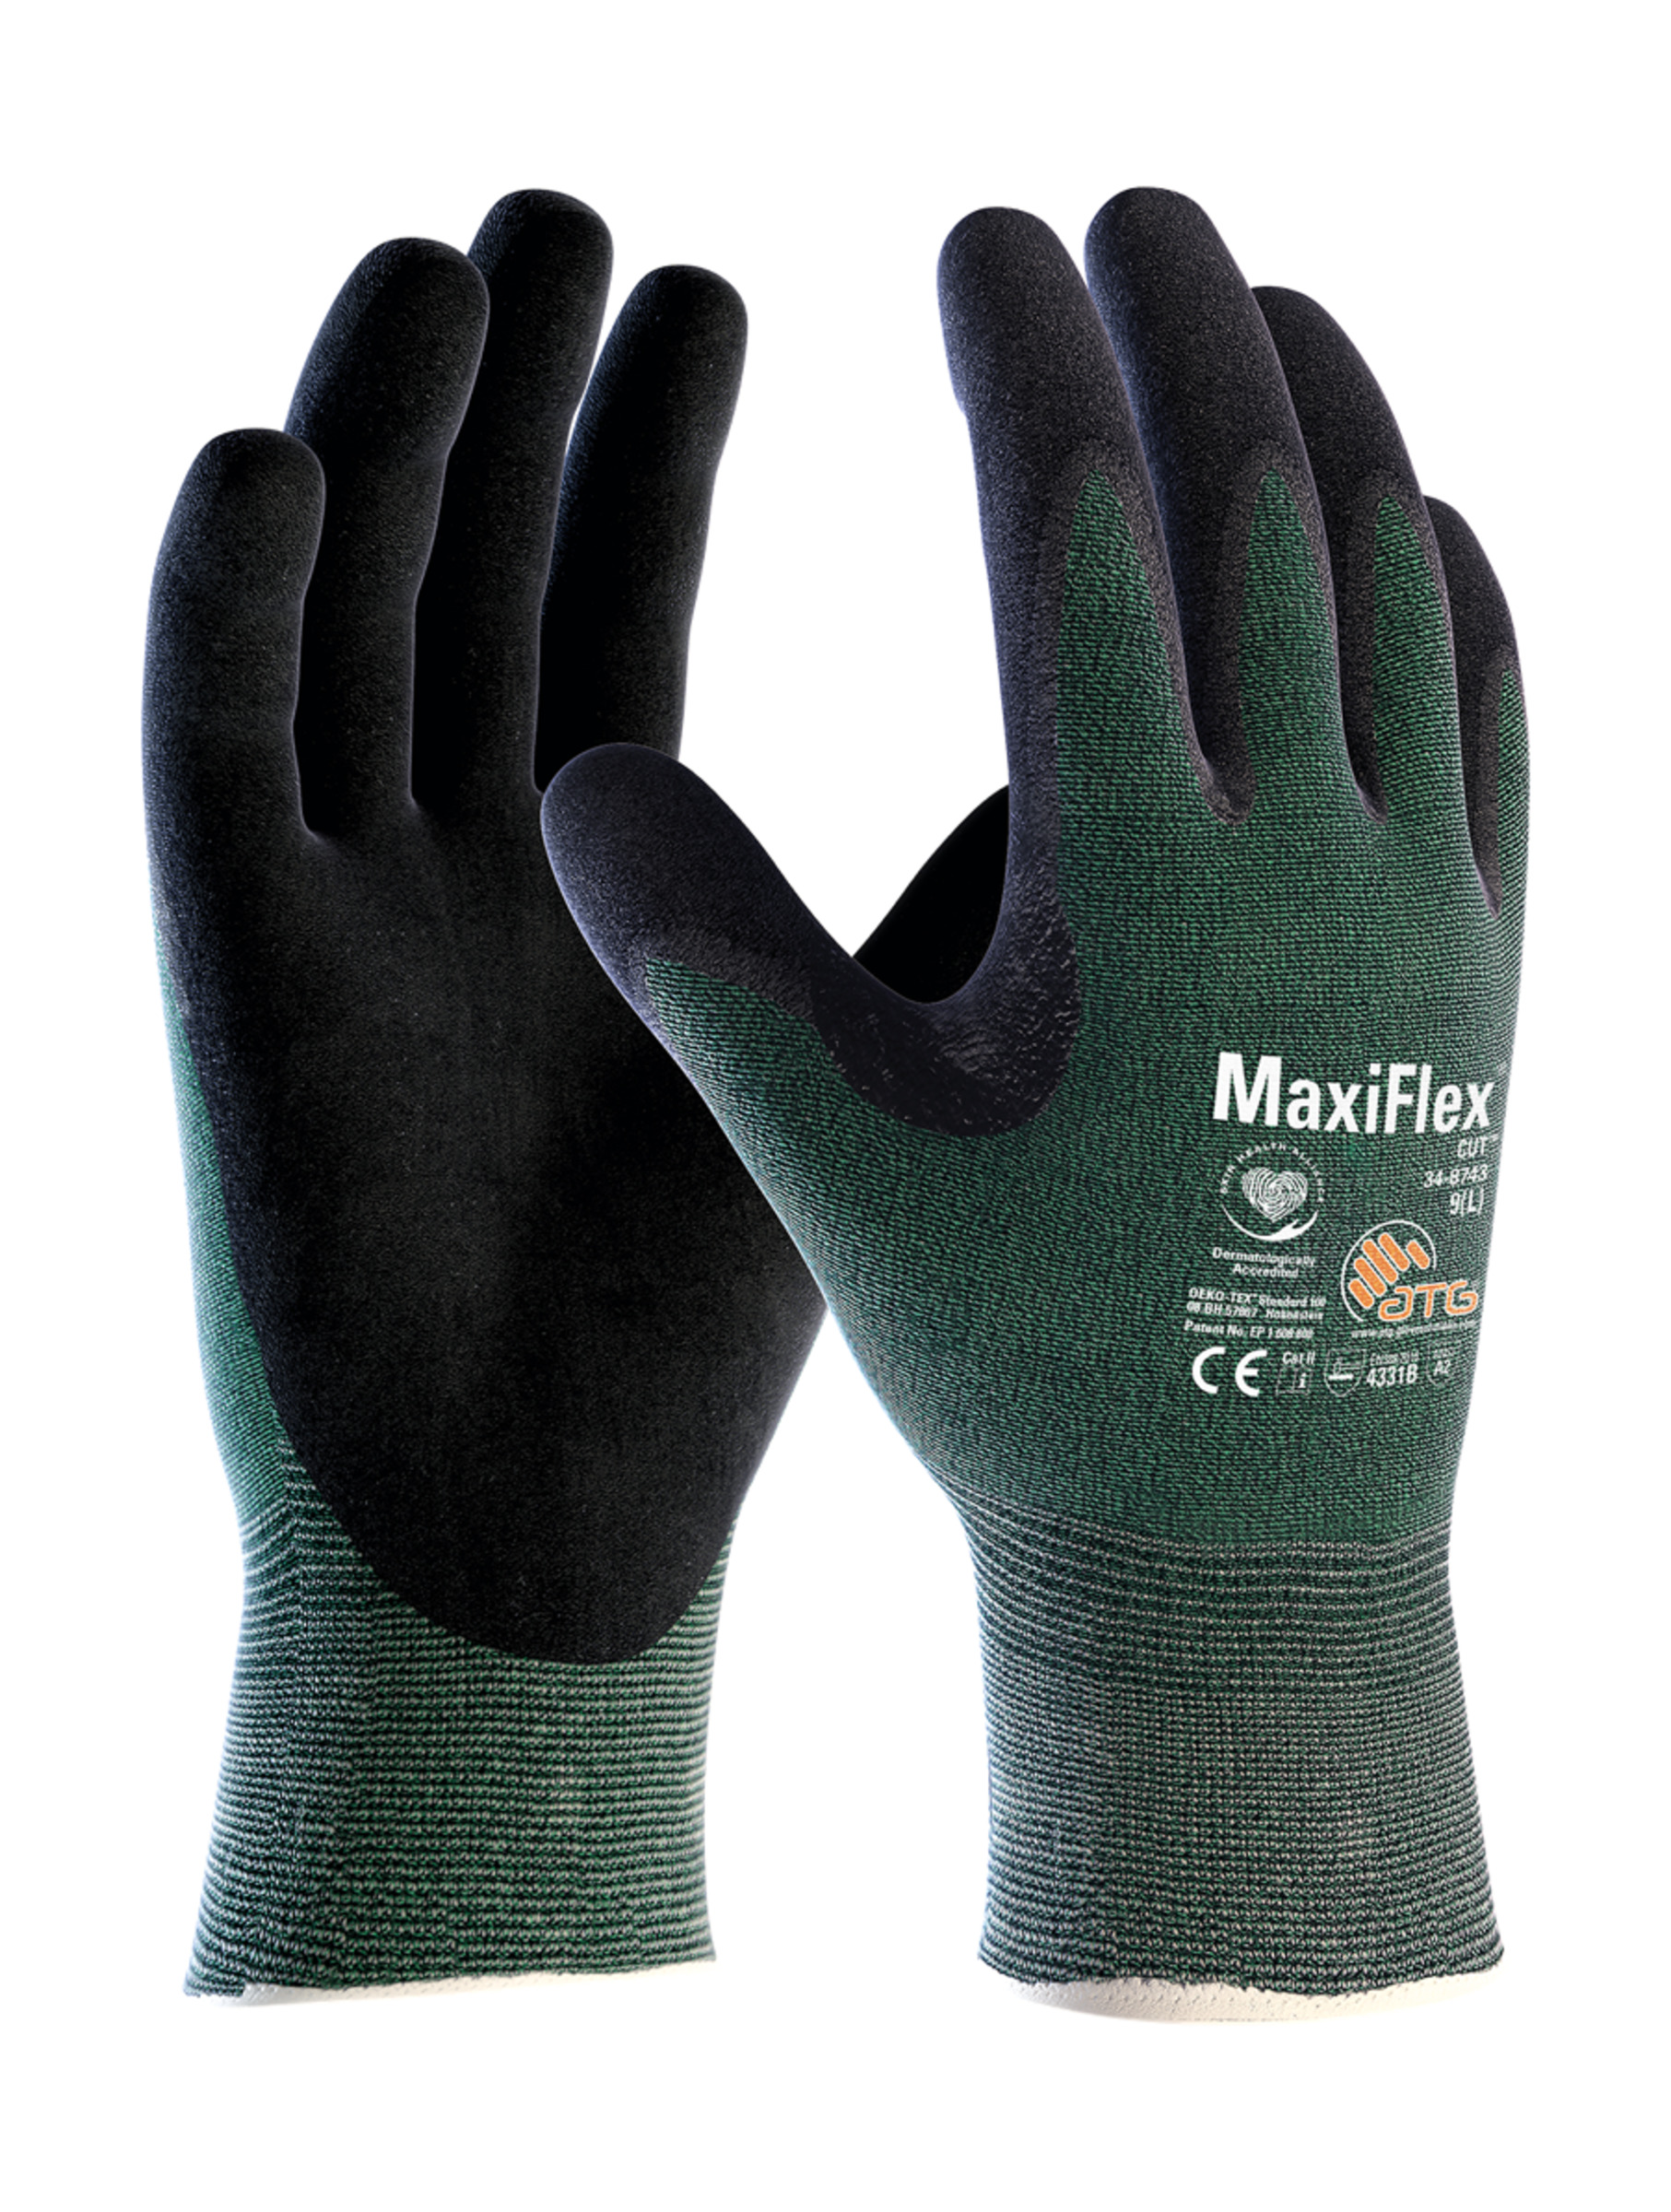 ATG MaxiFlex Cut 3B HT Gloves